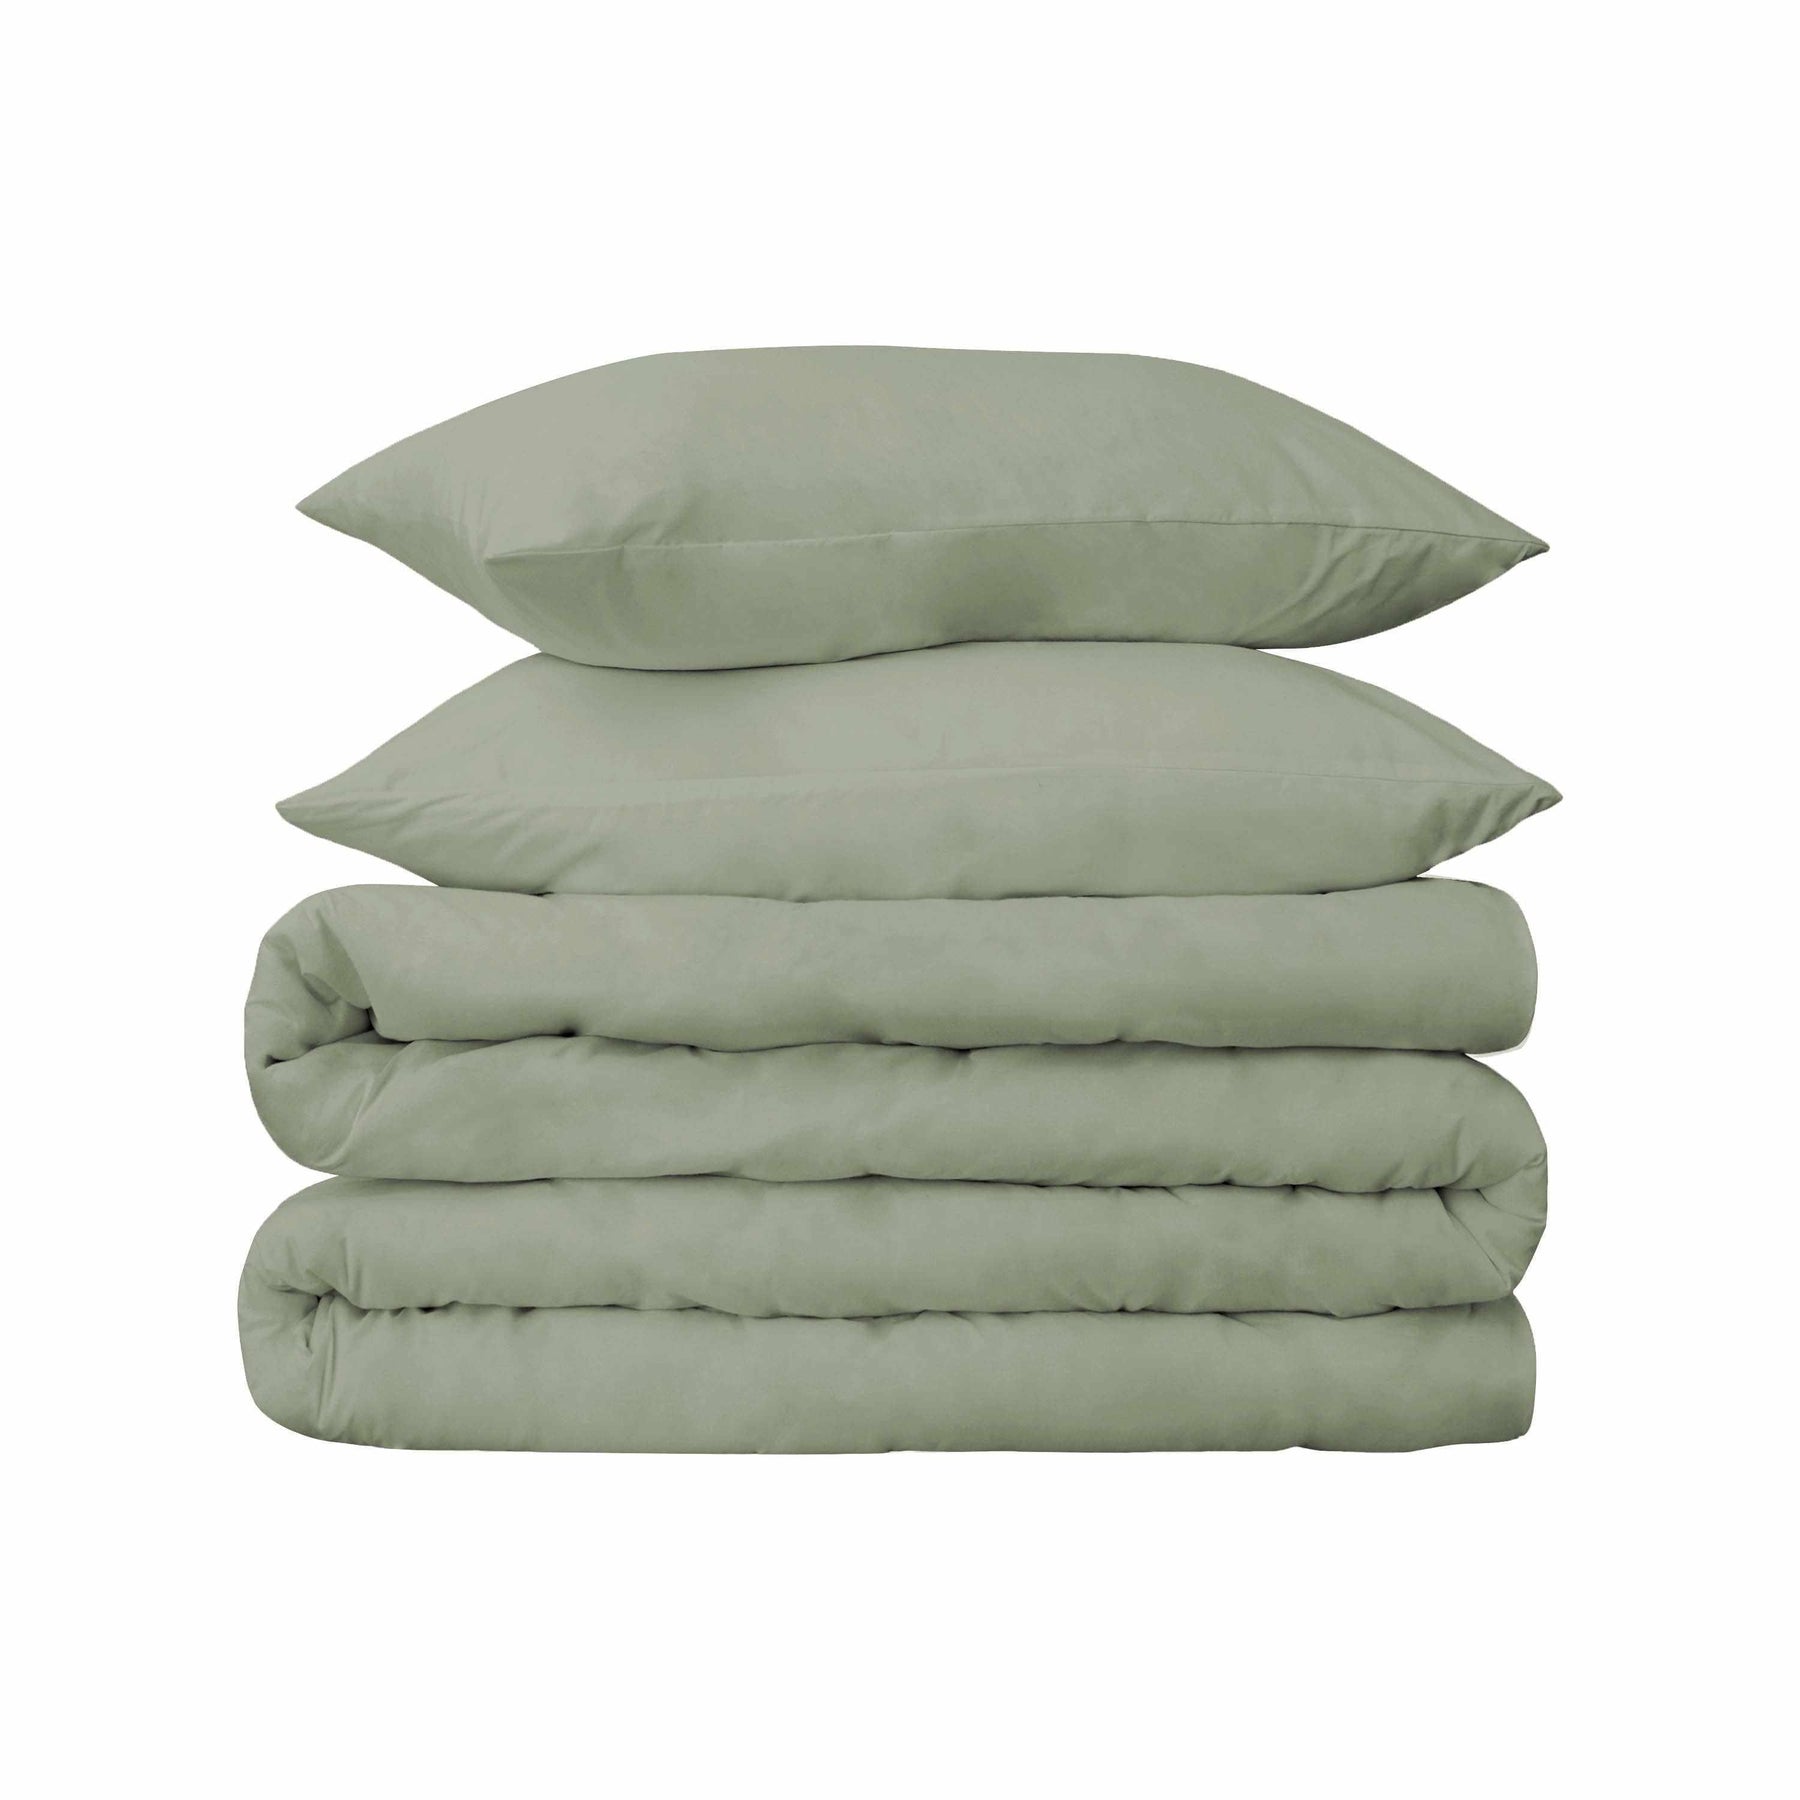  Superior Egyptian Cotton 700 Thread Count Breathable 3-Piece Duvet Cover Bedding Set - Sage